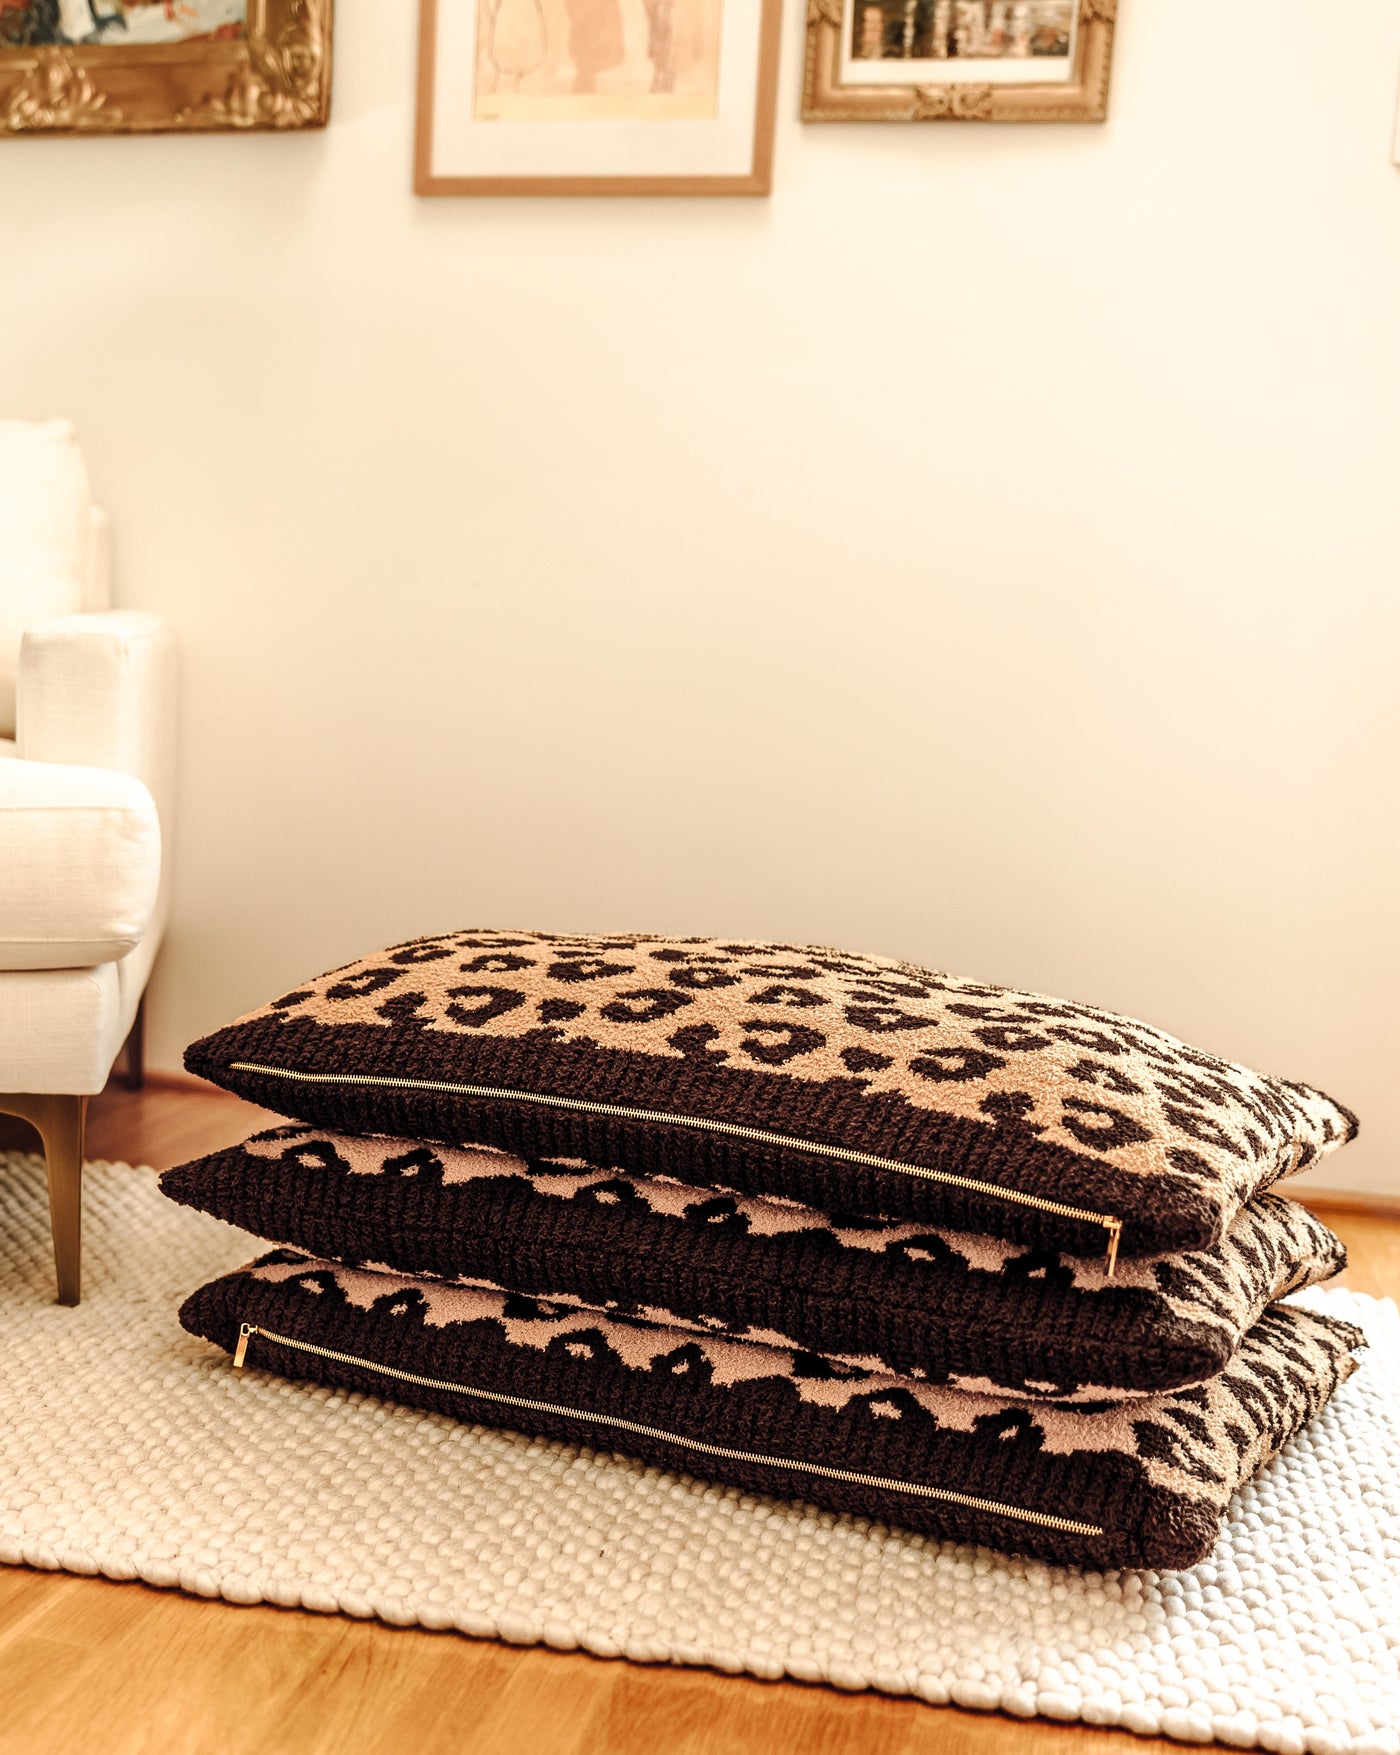 Snuggle Knit Tan Leopard Dog Bed